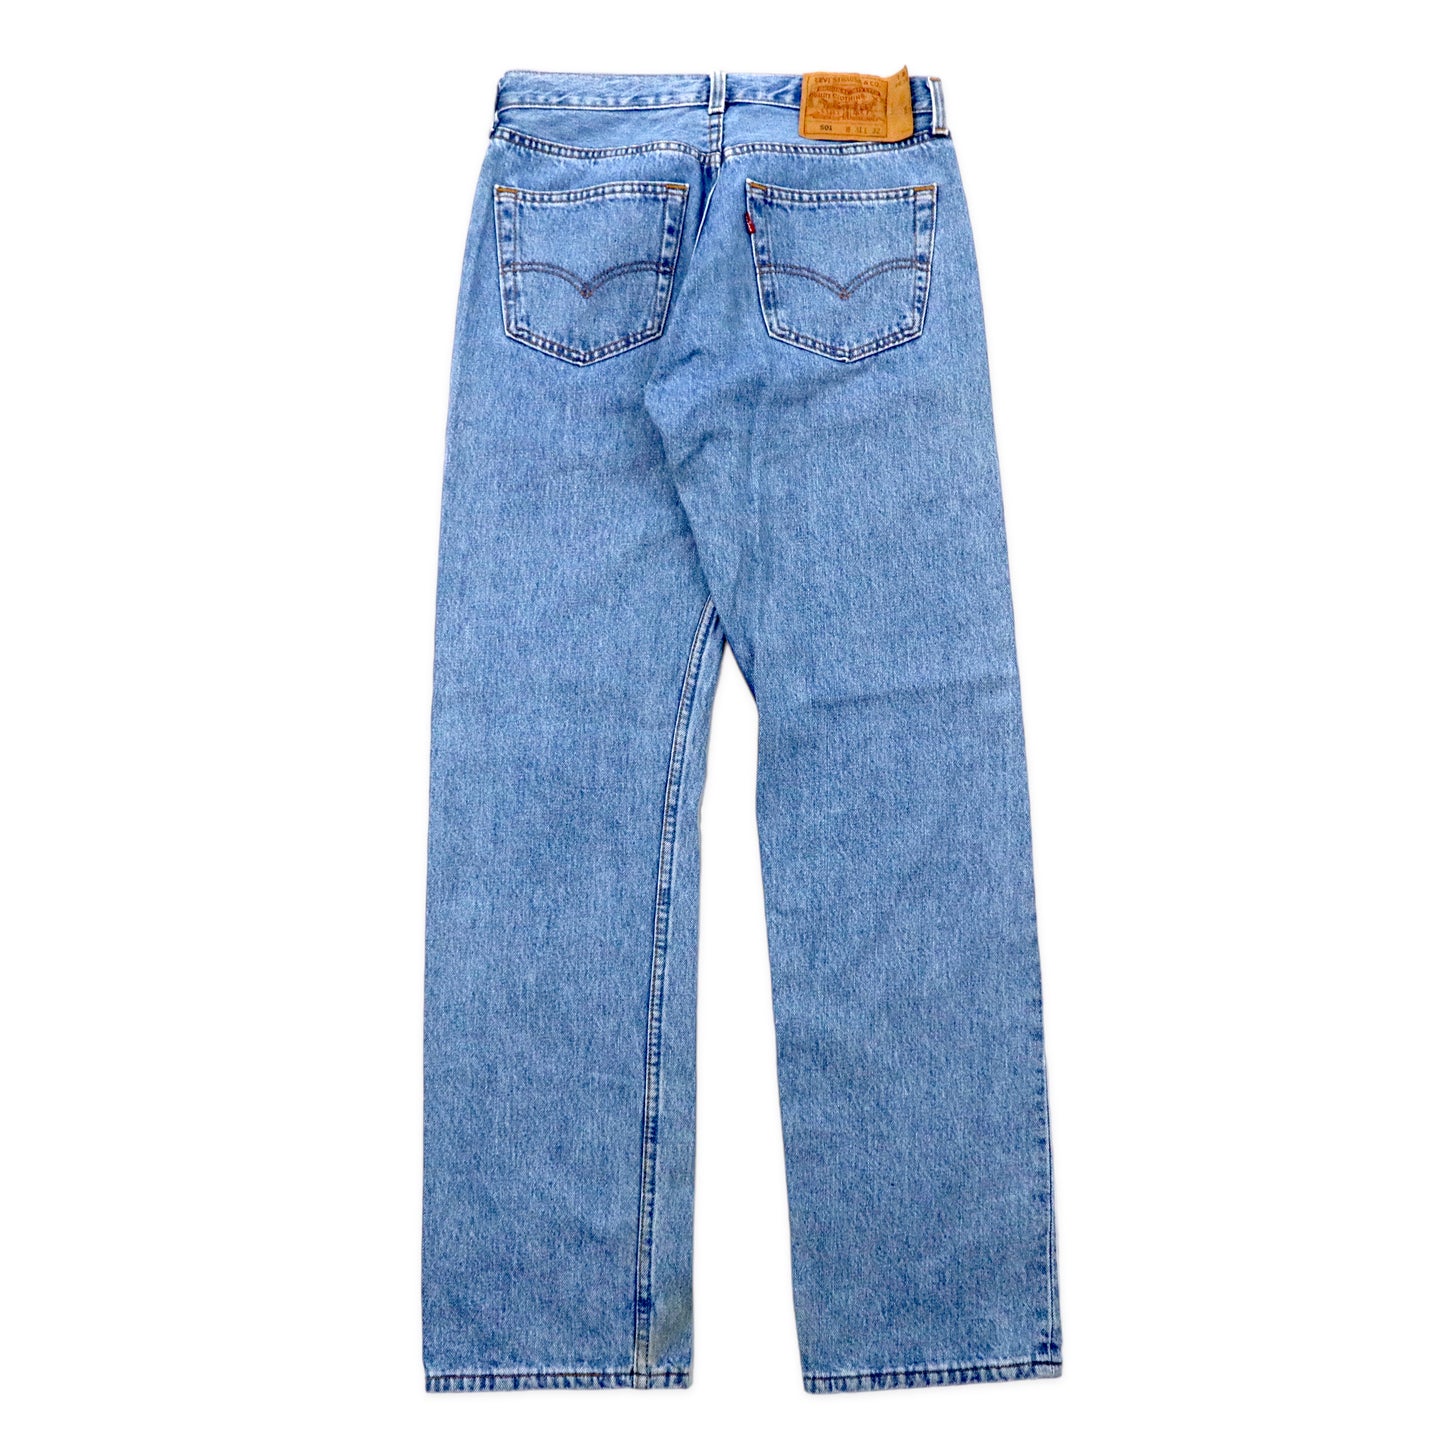 USA MADE 90's Levi's 501 Denim Pants 31 Blue Ice Wash 501 6115